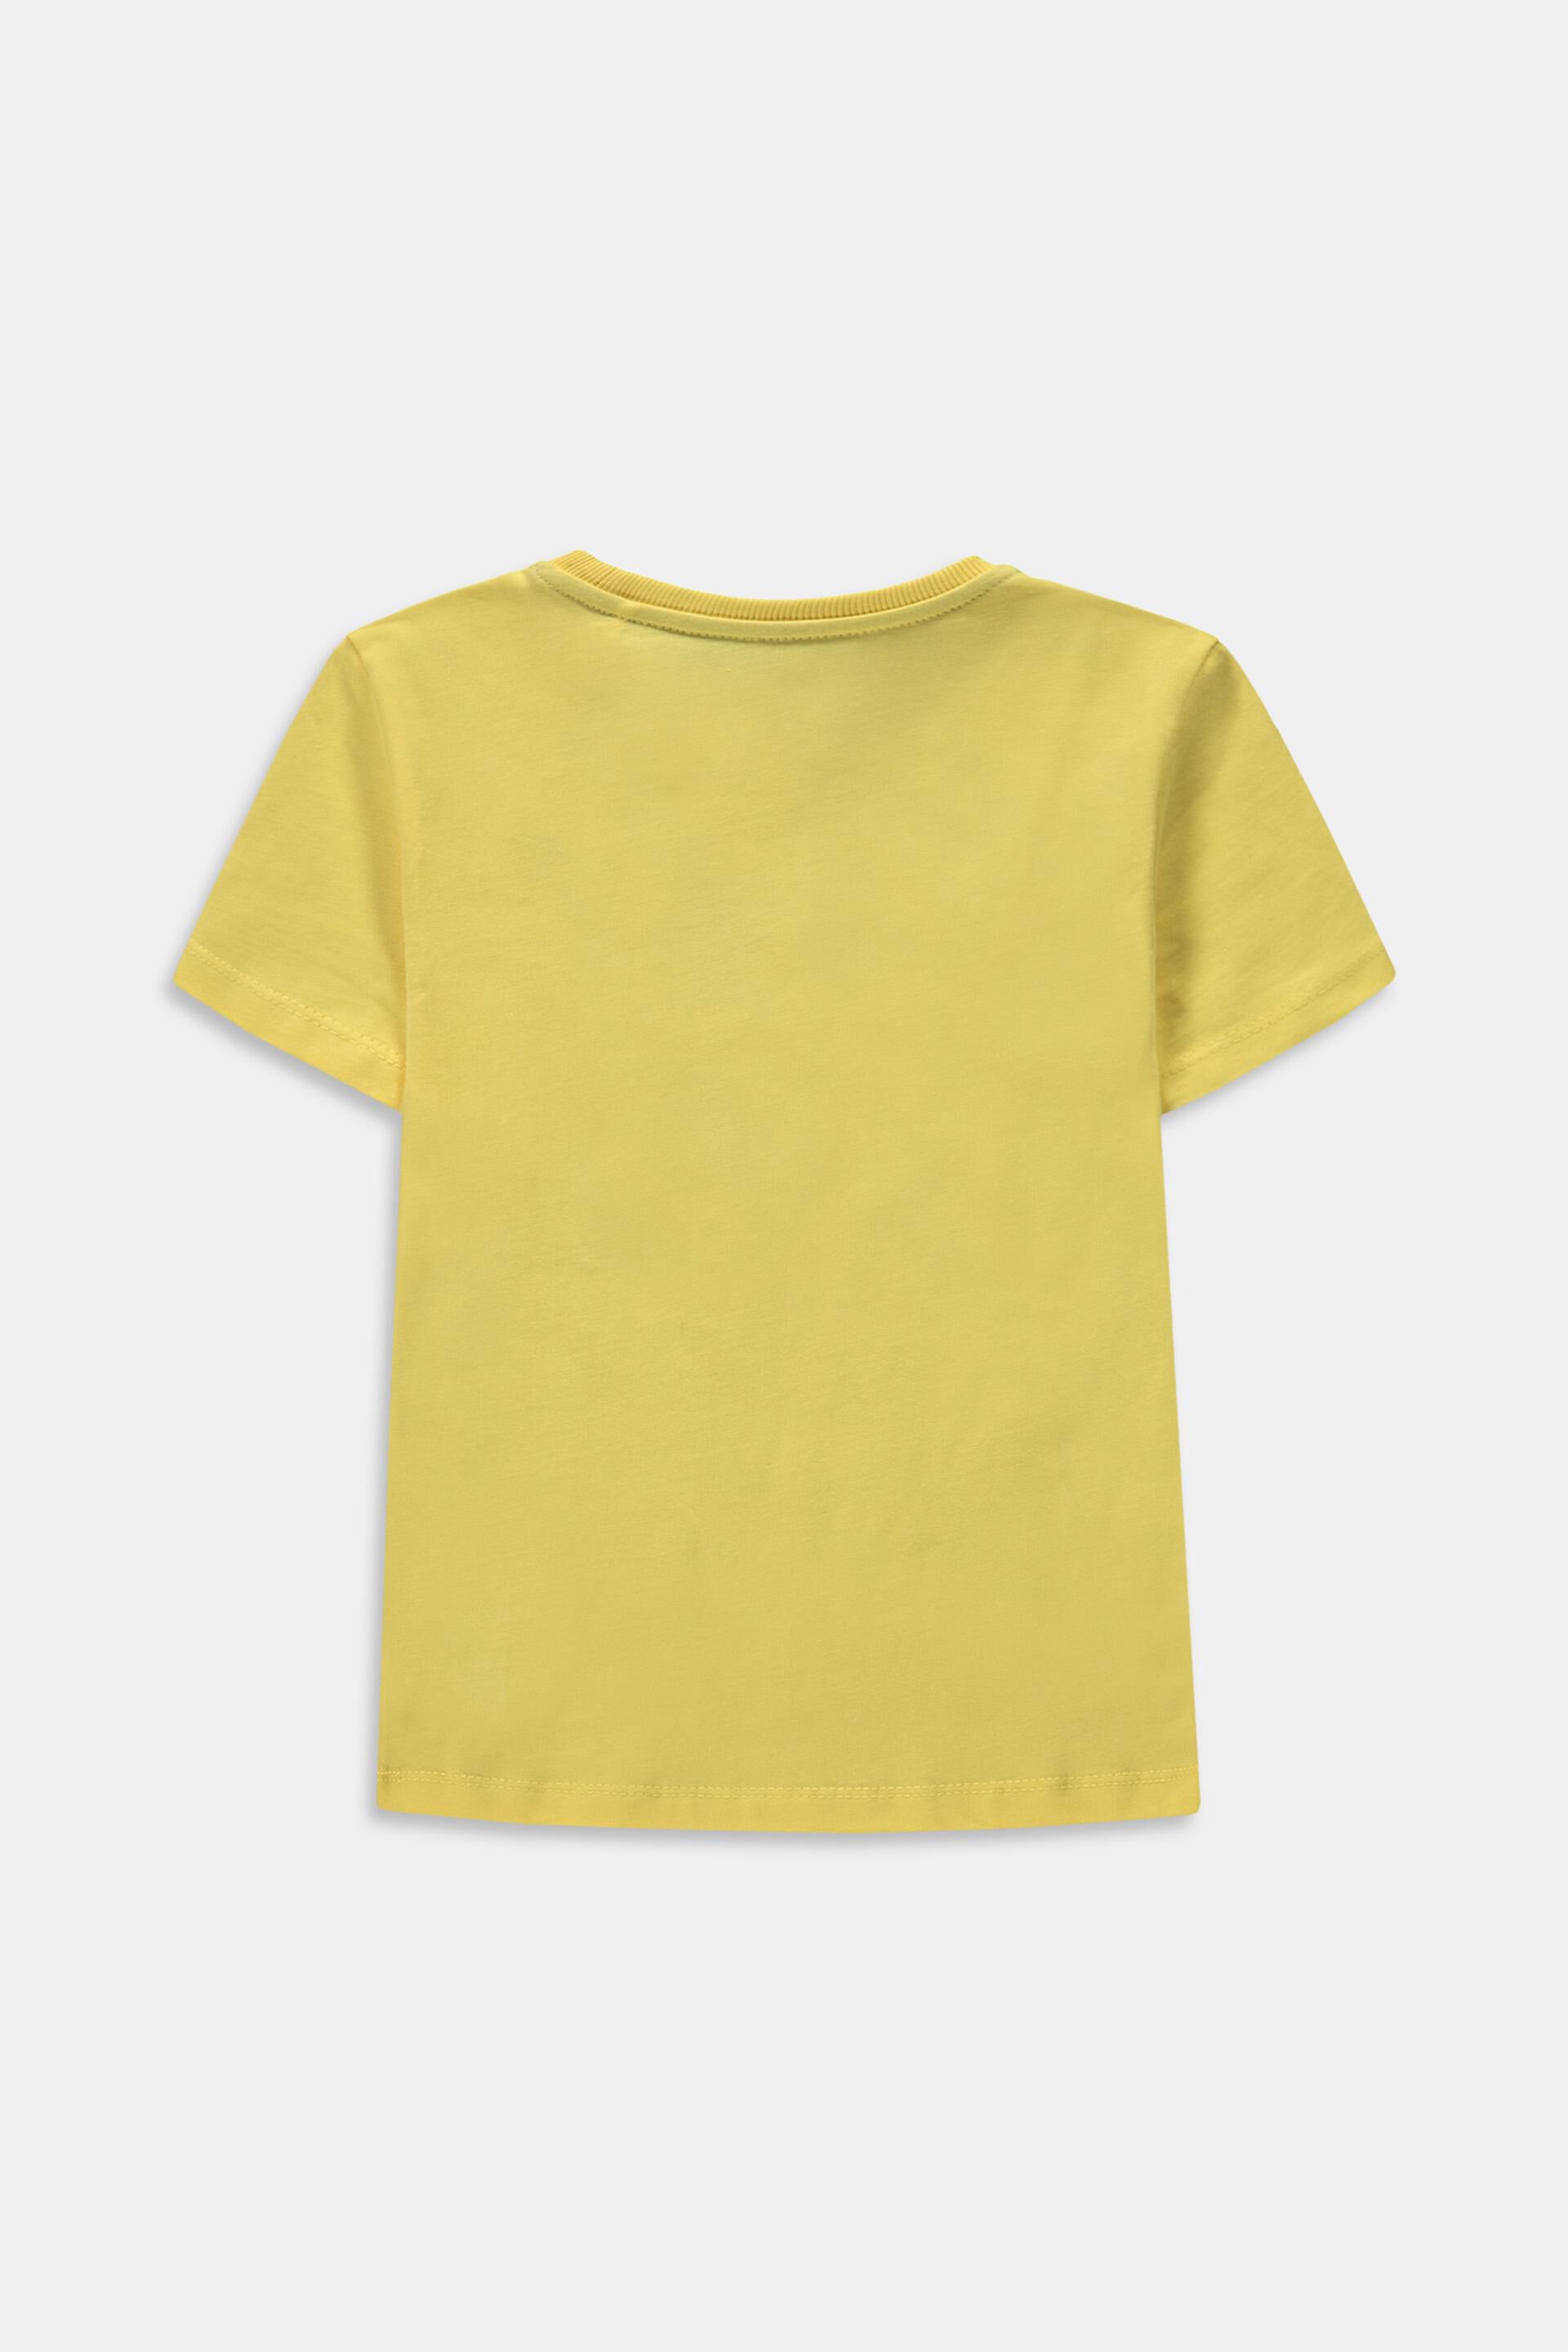 KINDER Hemden & T-Shirts Pailletten Dunkelblau 14Y Rabatt 63 % Esprit T-Shirt 